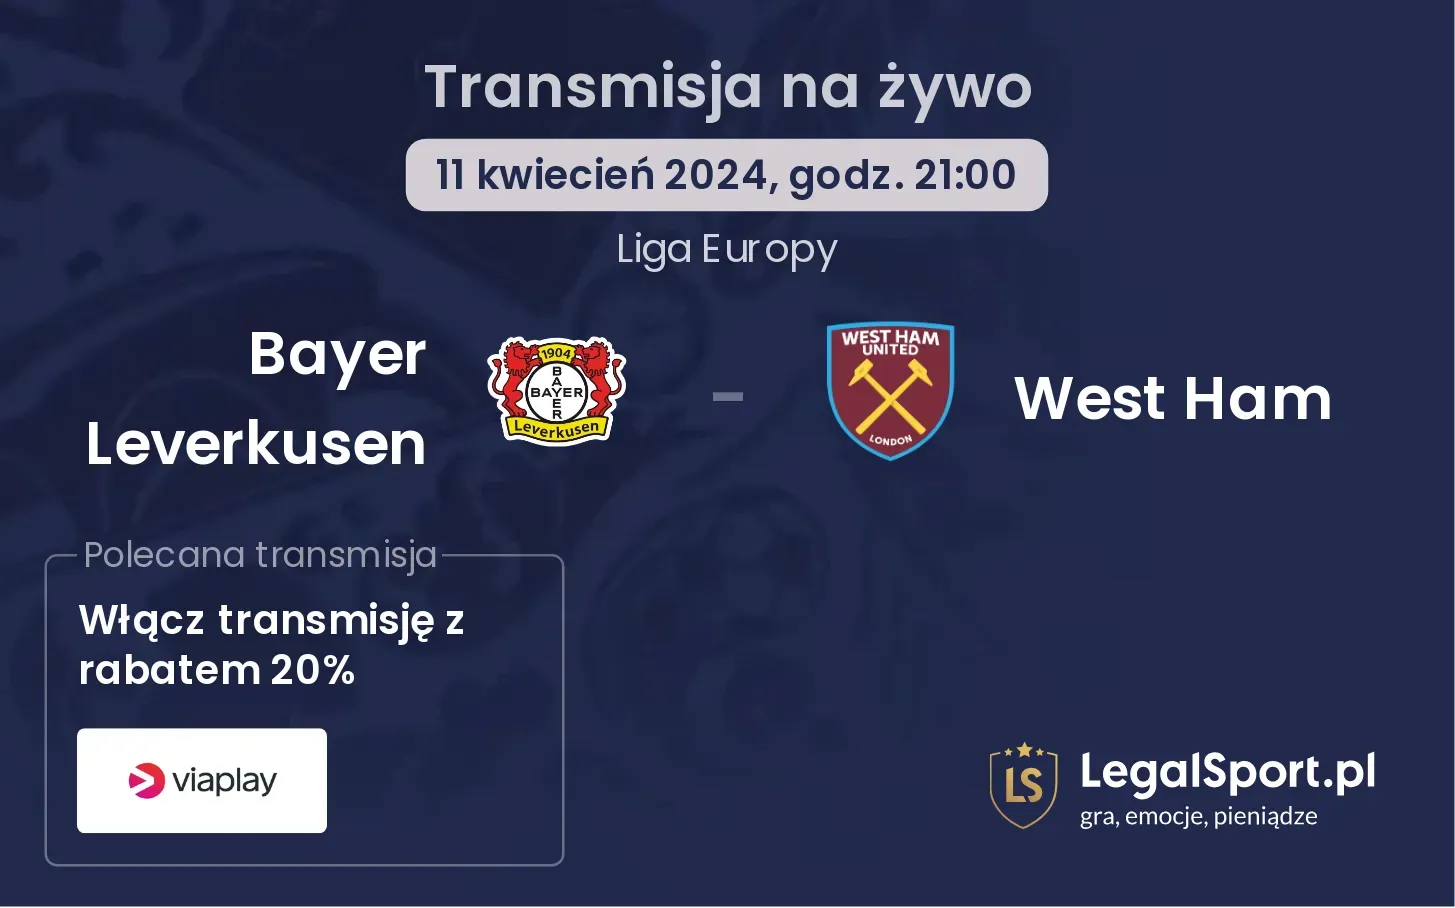 Bayer Leverkusen - West Ham transmisja na żywo